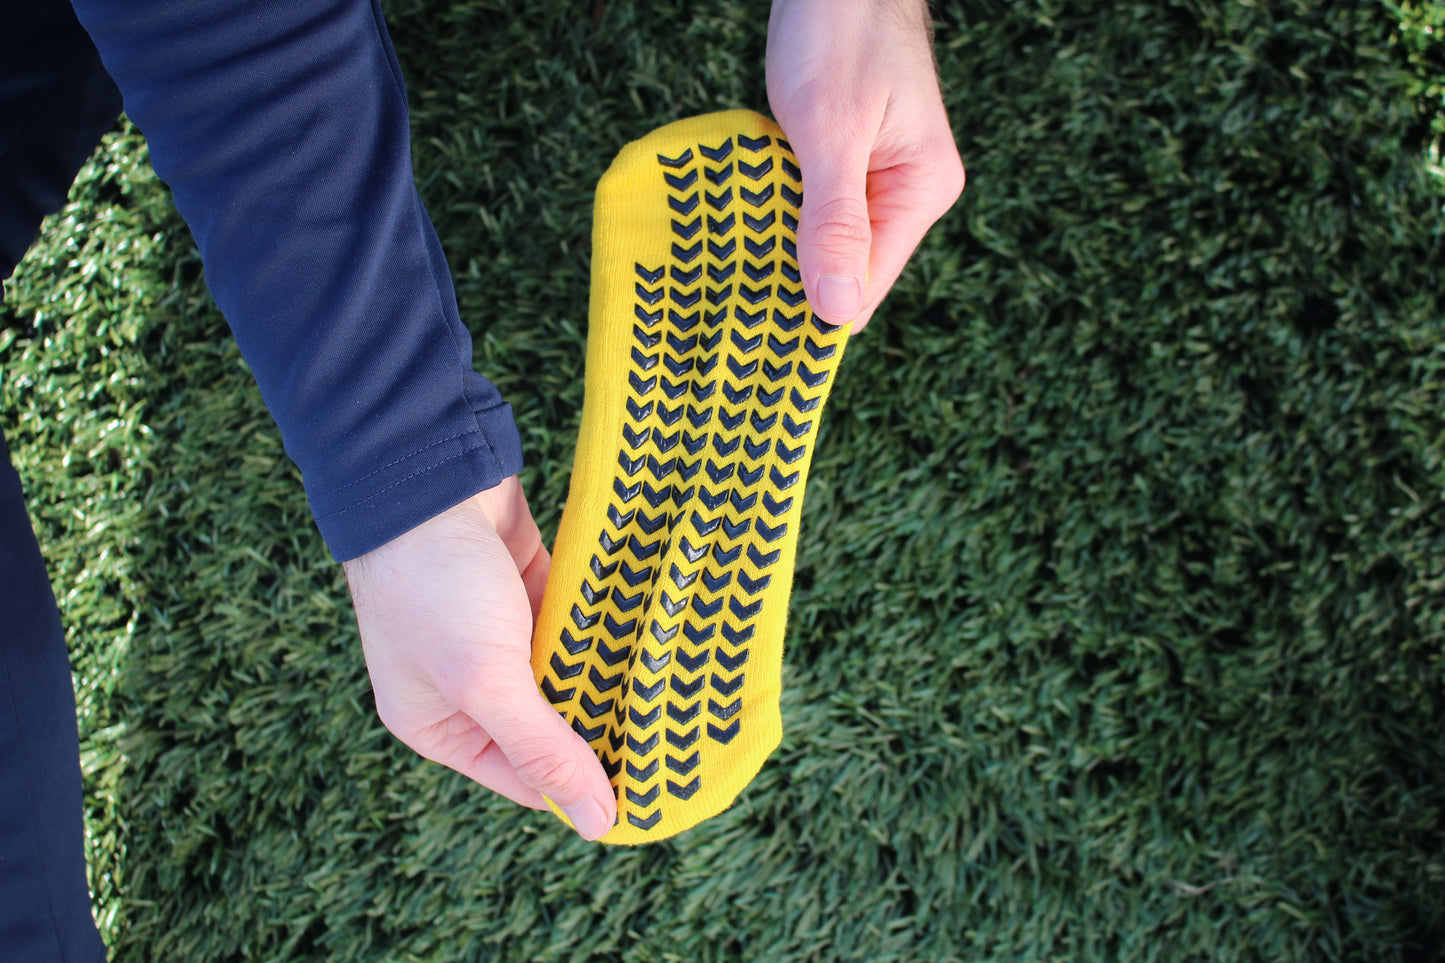 Elevate Grip Socks - Yellow.